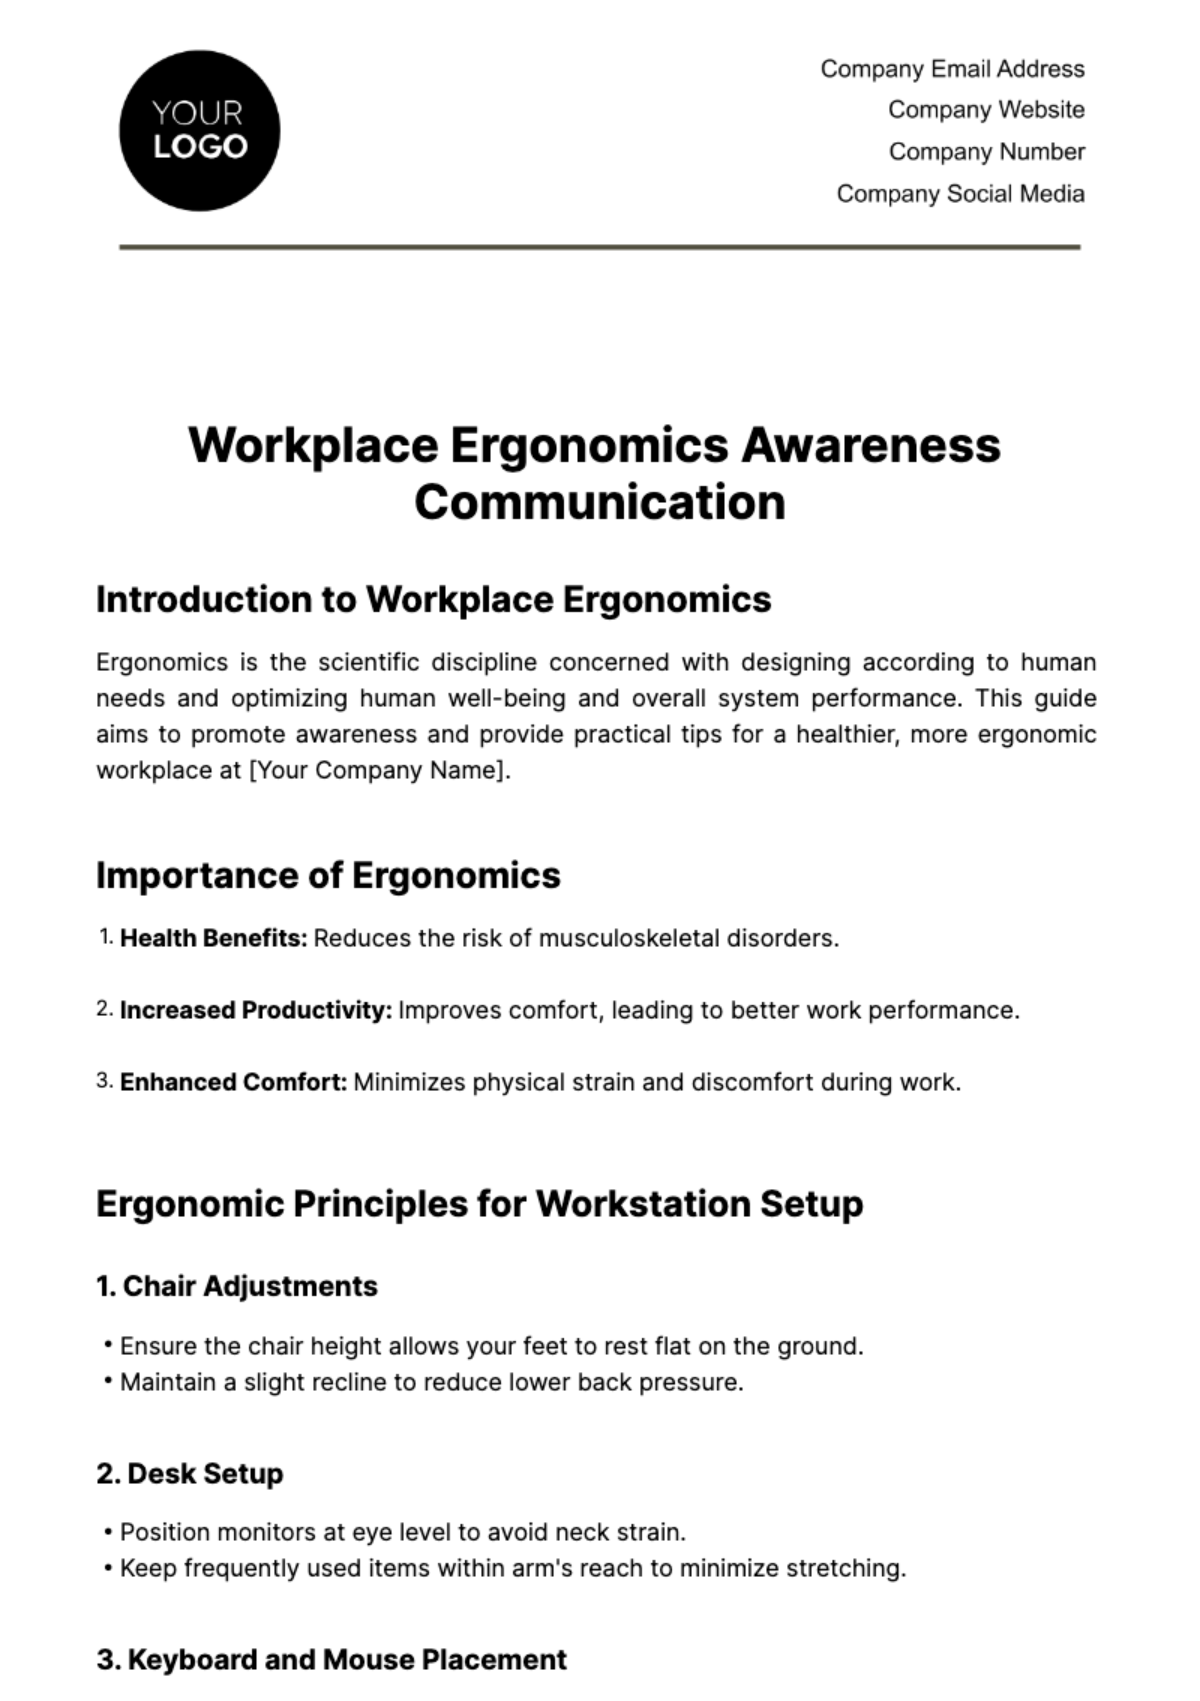 Workplace Ergonomics Awareness Communication Template